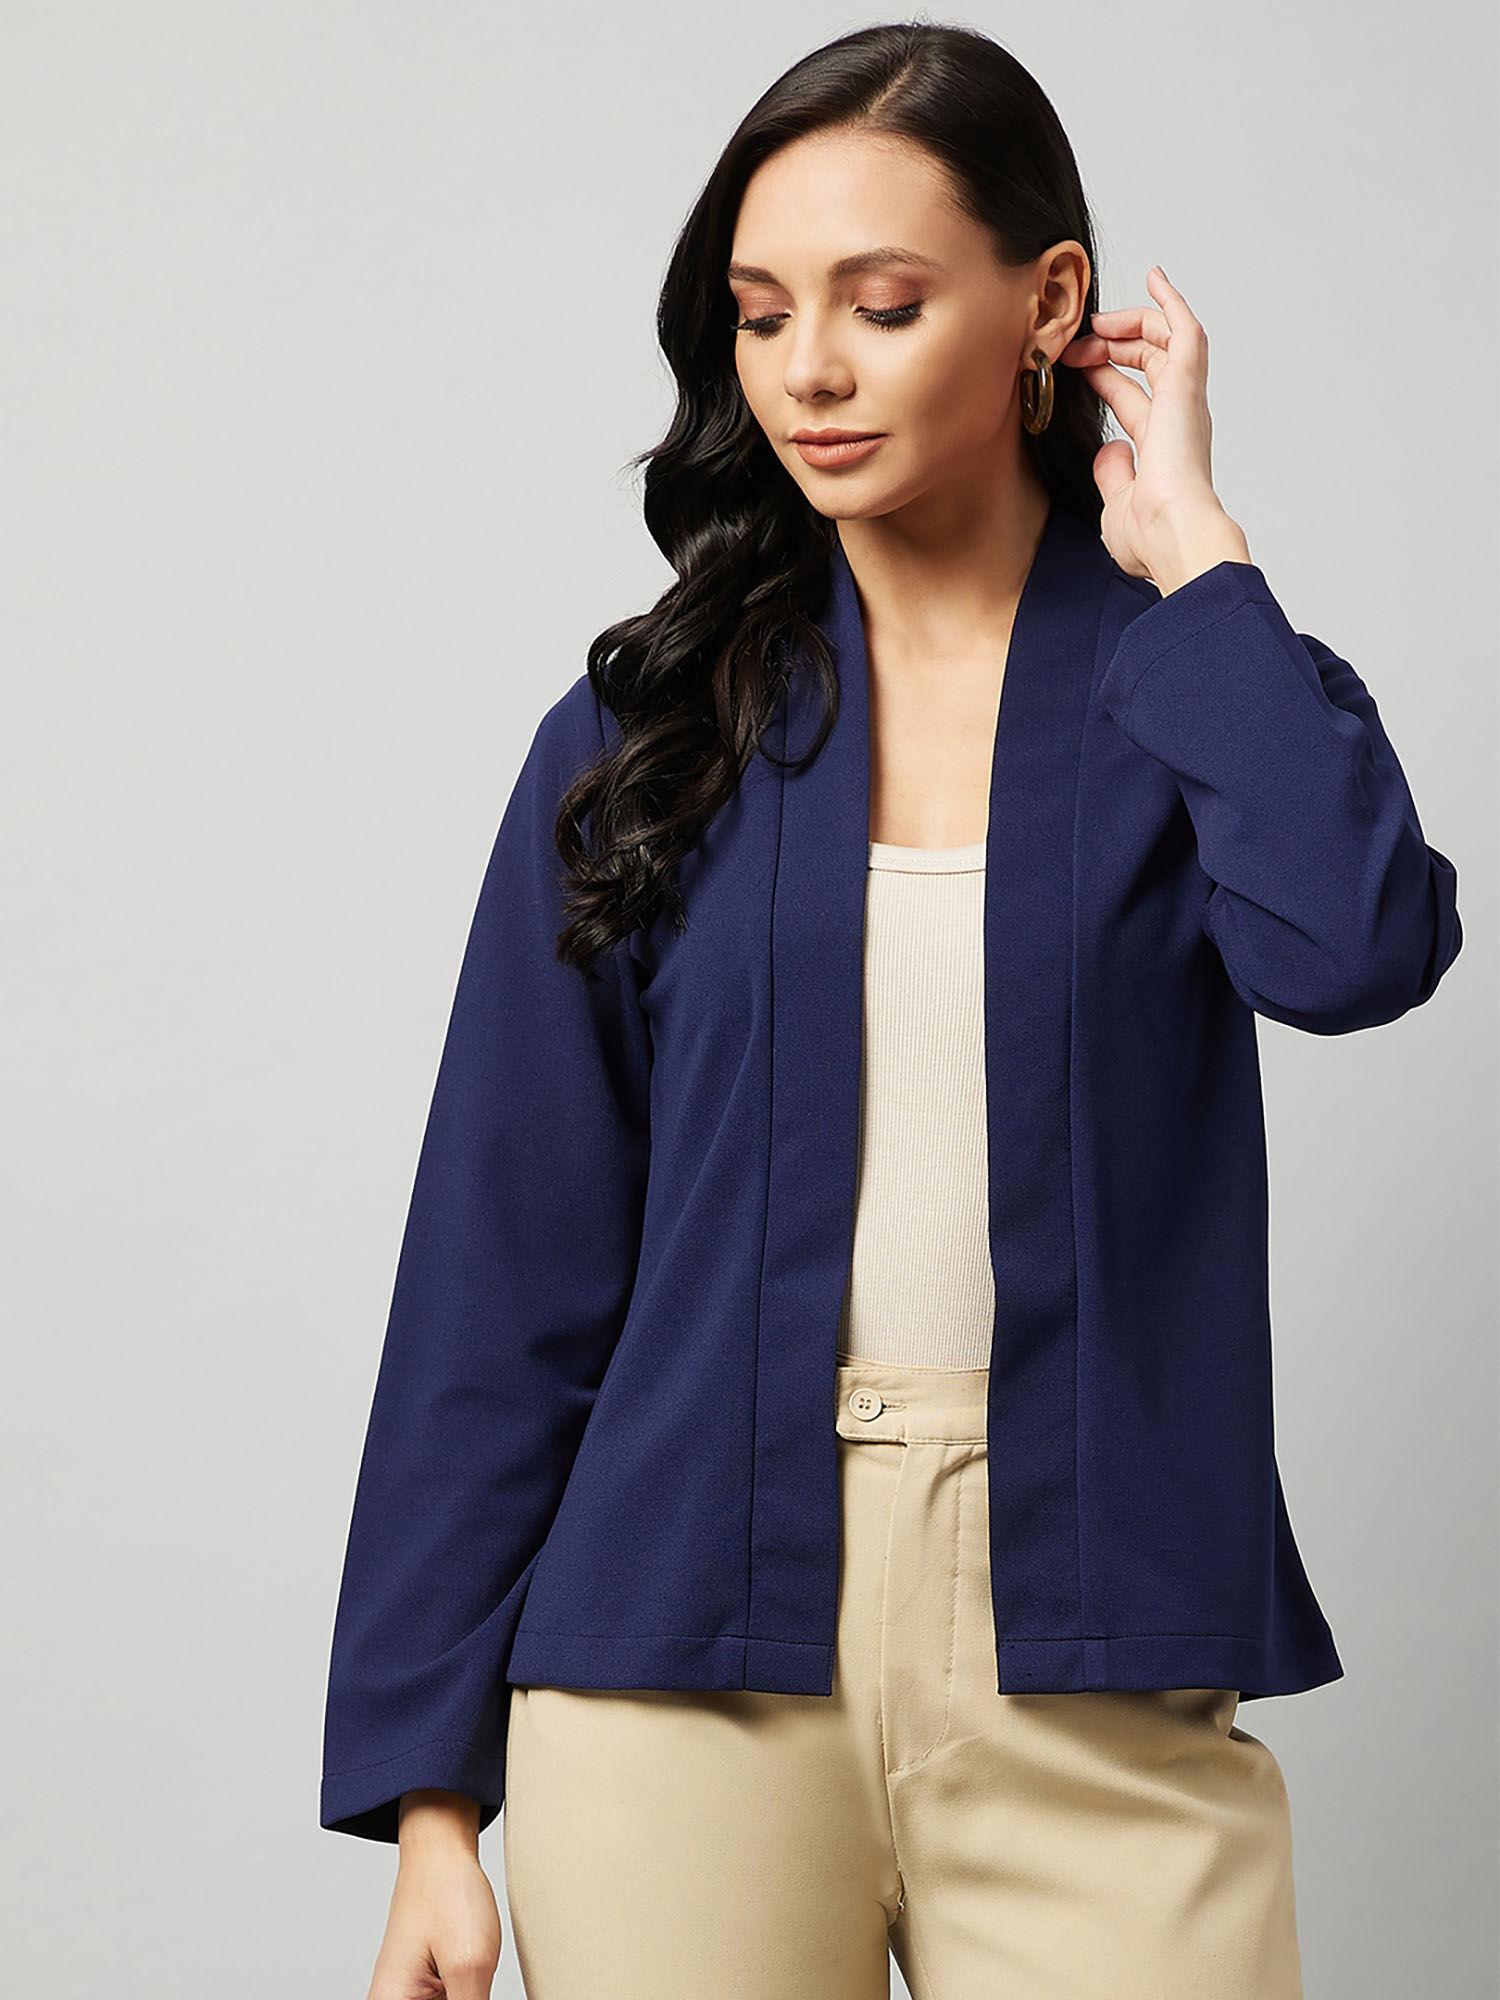 women-casual-navy-blue-long-sleeves-regular-open-front-shrug